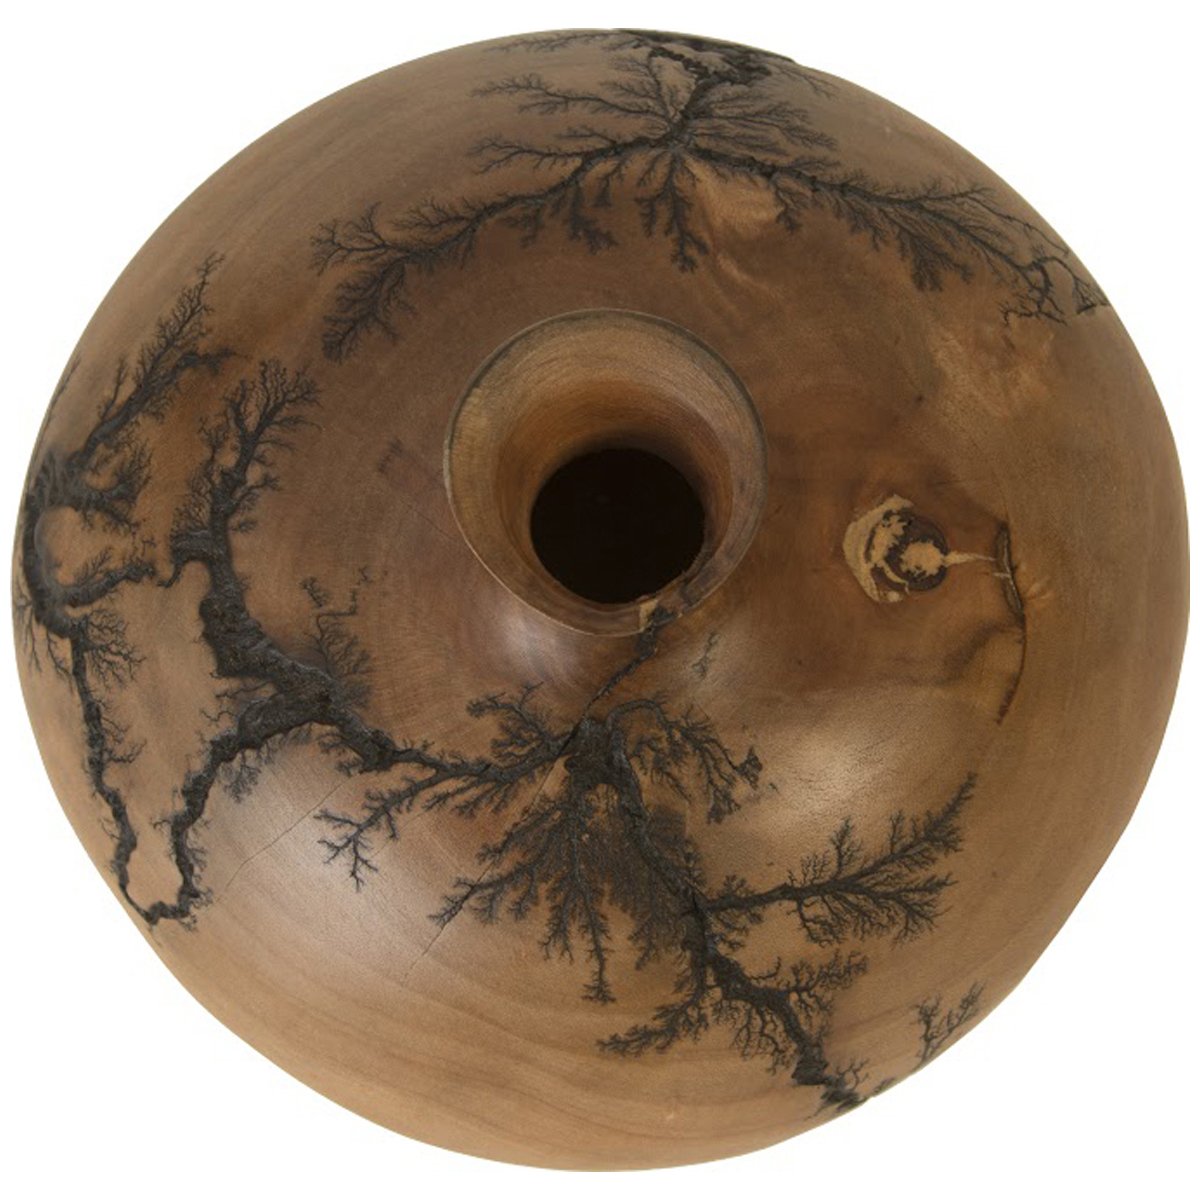 Phillips Collection Lightning Vase, Short-Neck